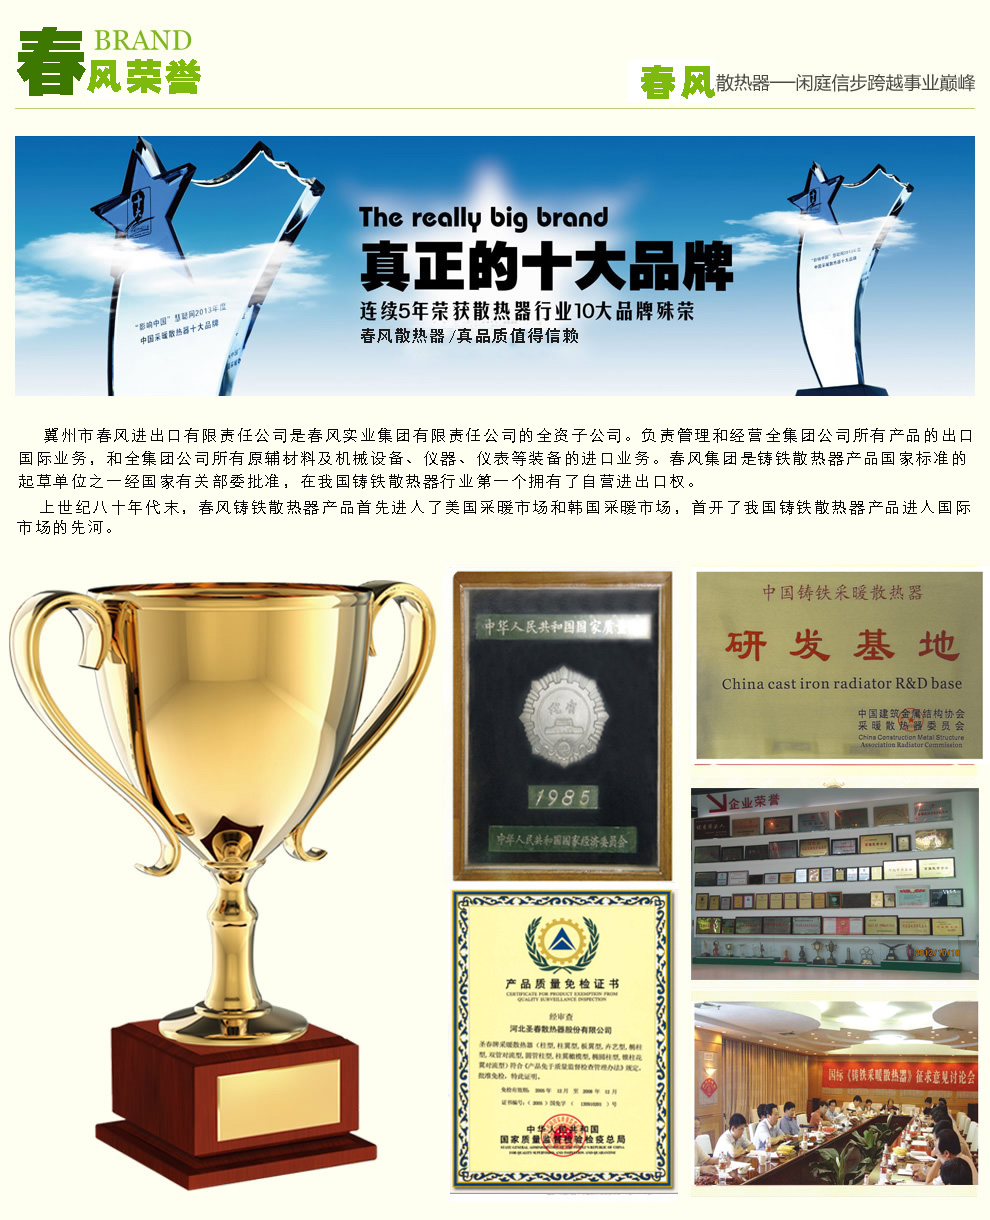 chunfeng cast iron radiator honors